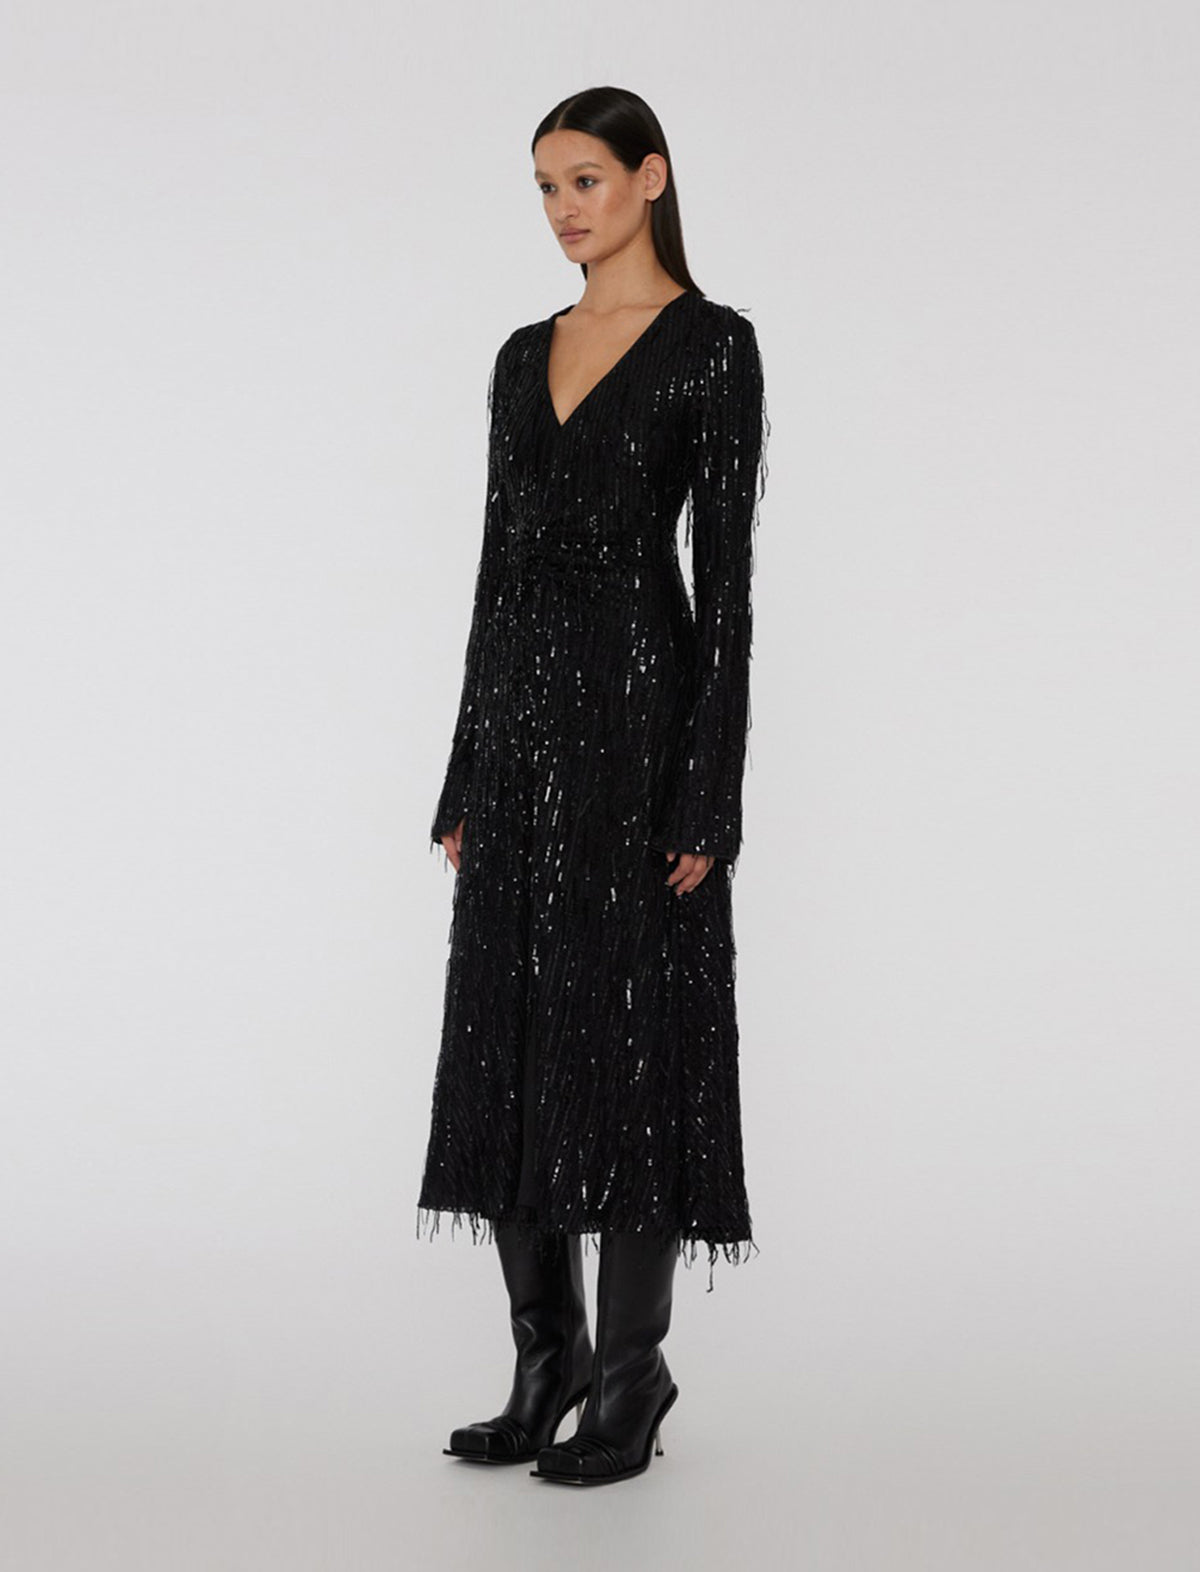 ROTATE Sierra Sequin Fringed Midi Dress in Black